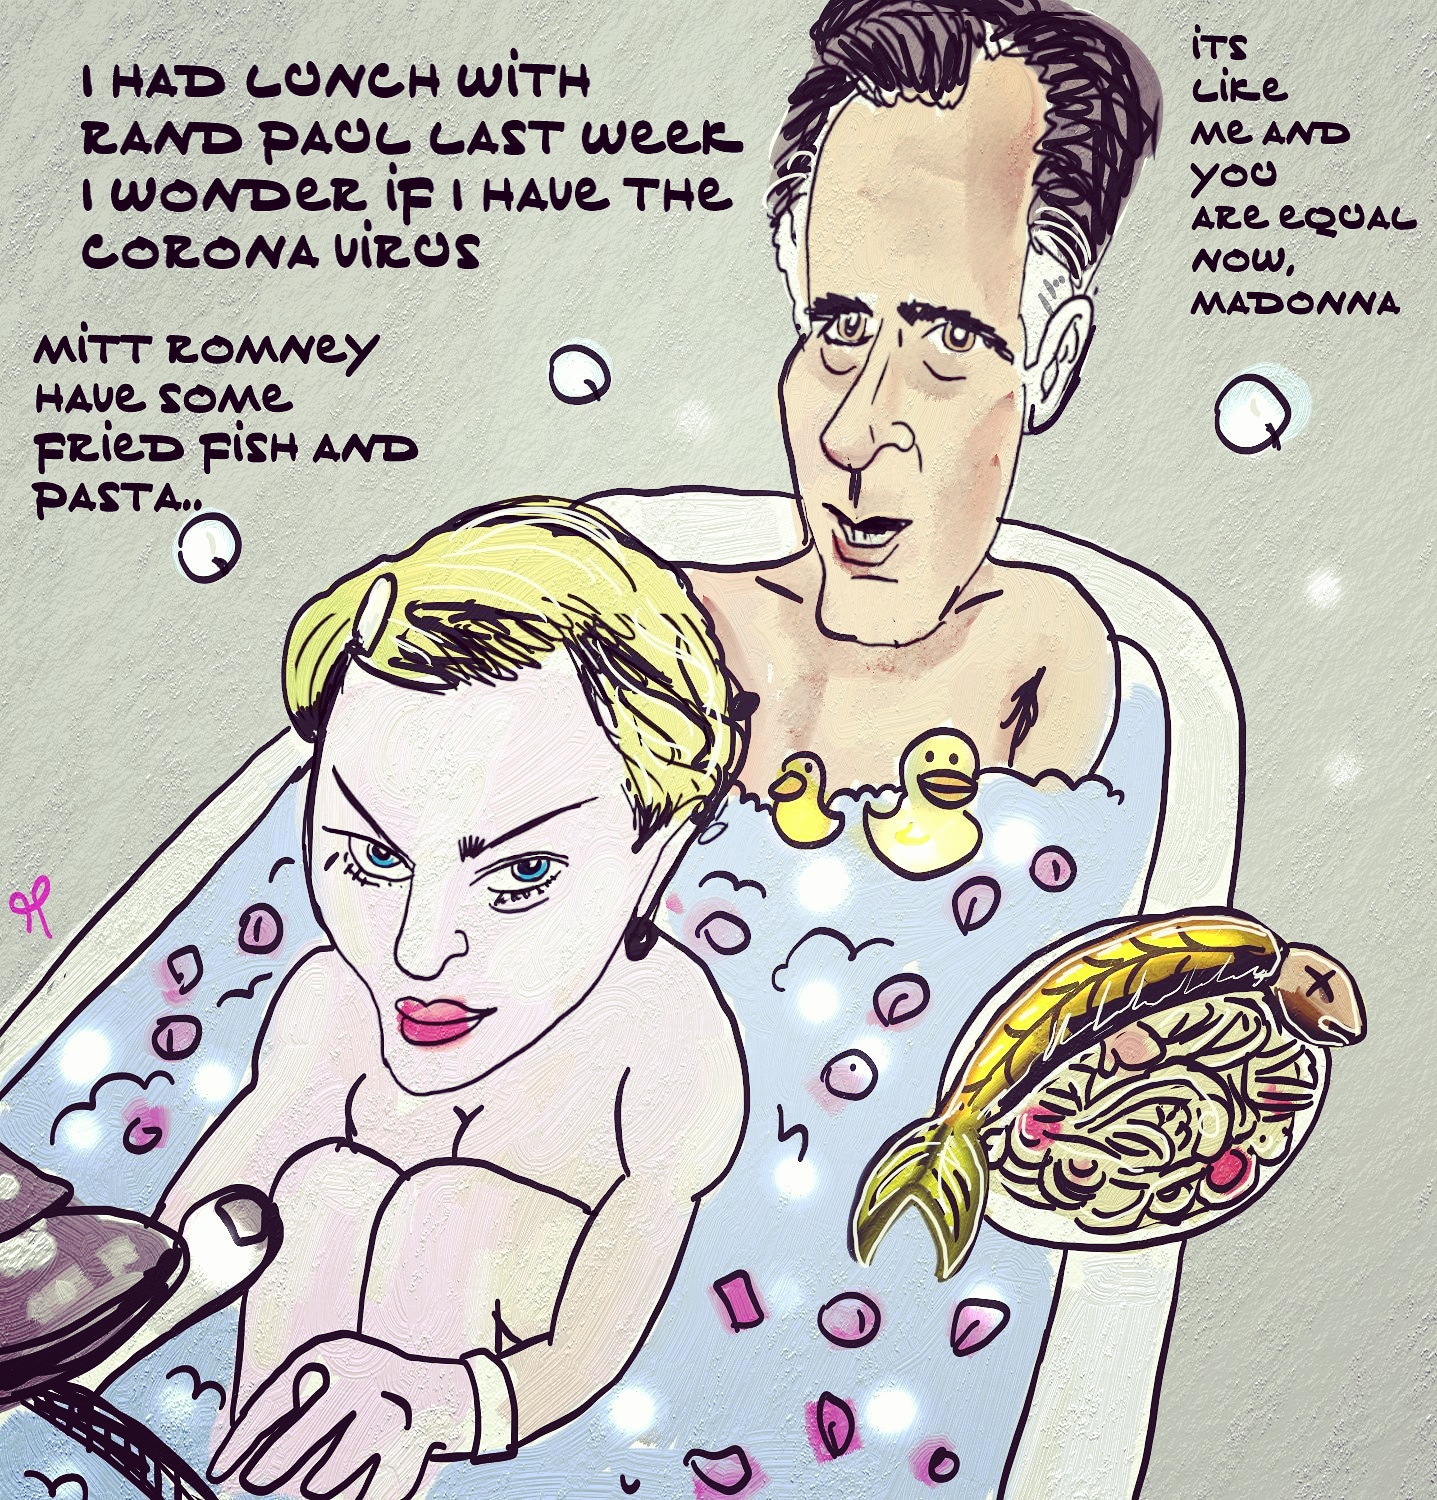 Mitt Romney Madonna coronavirus Rand Paul political cartoon post thumbnail image